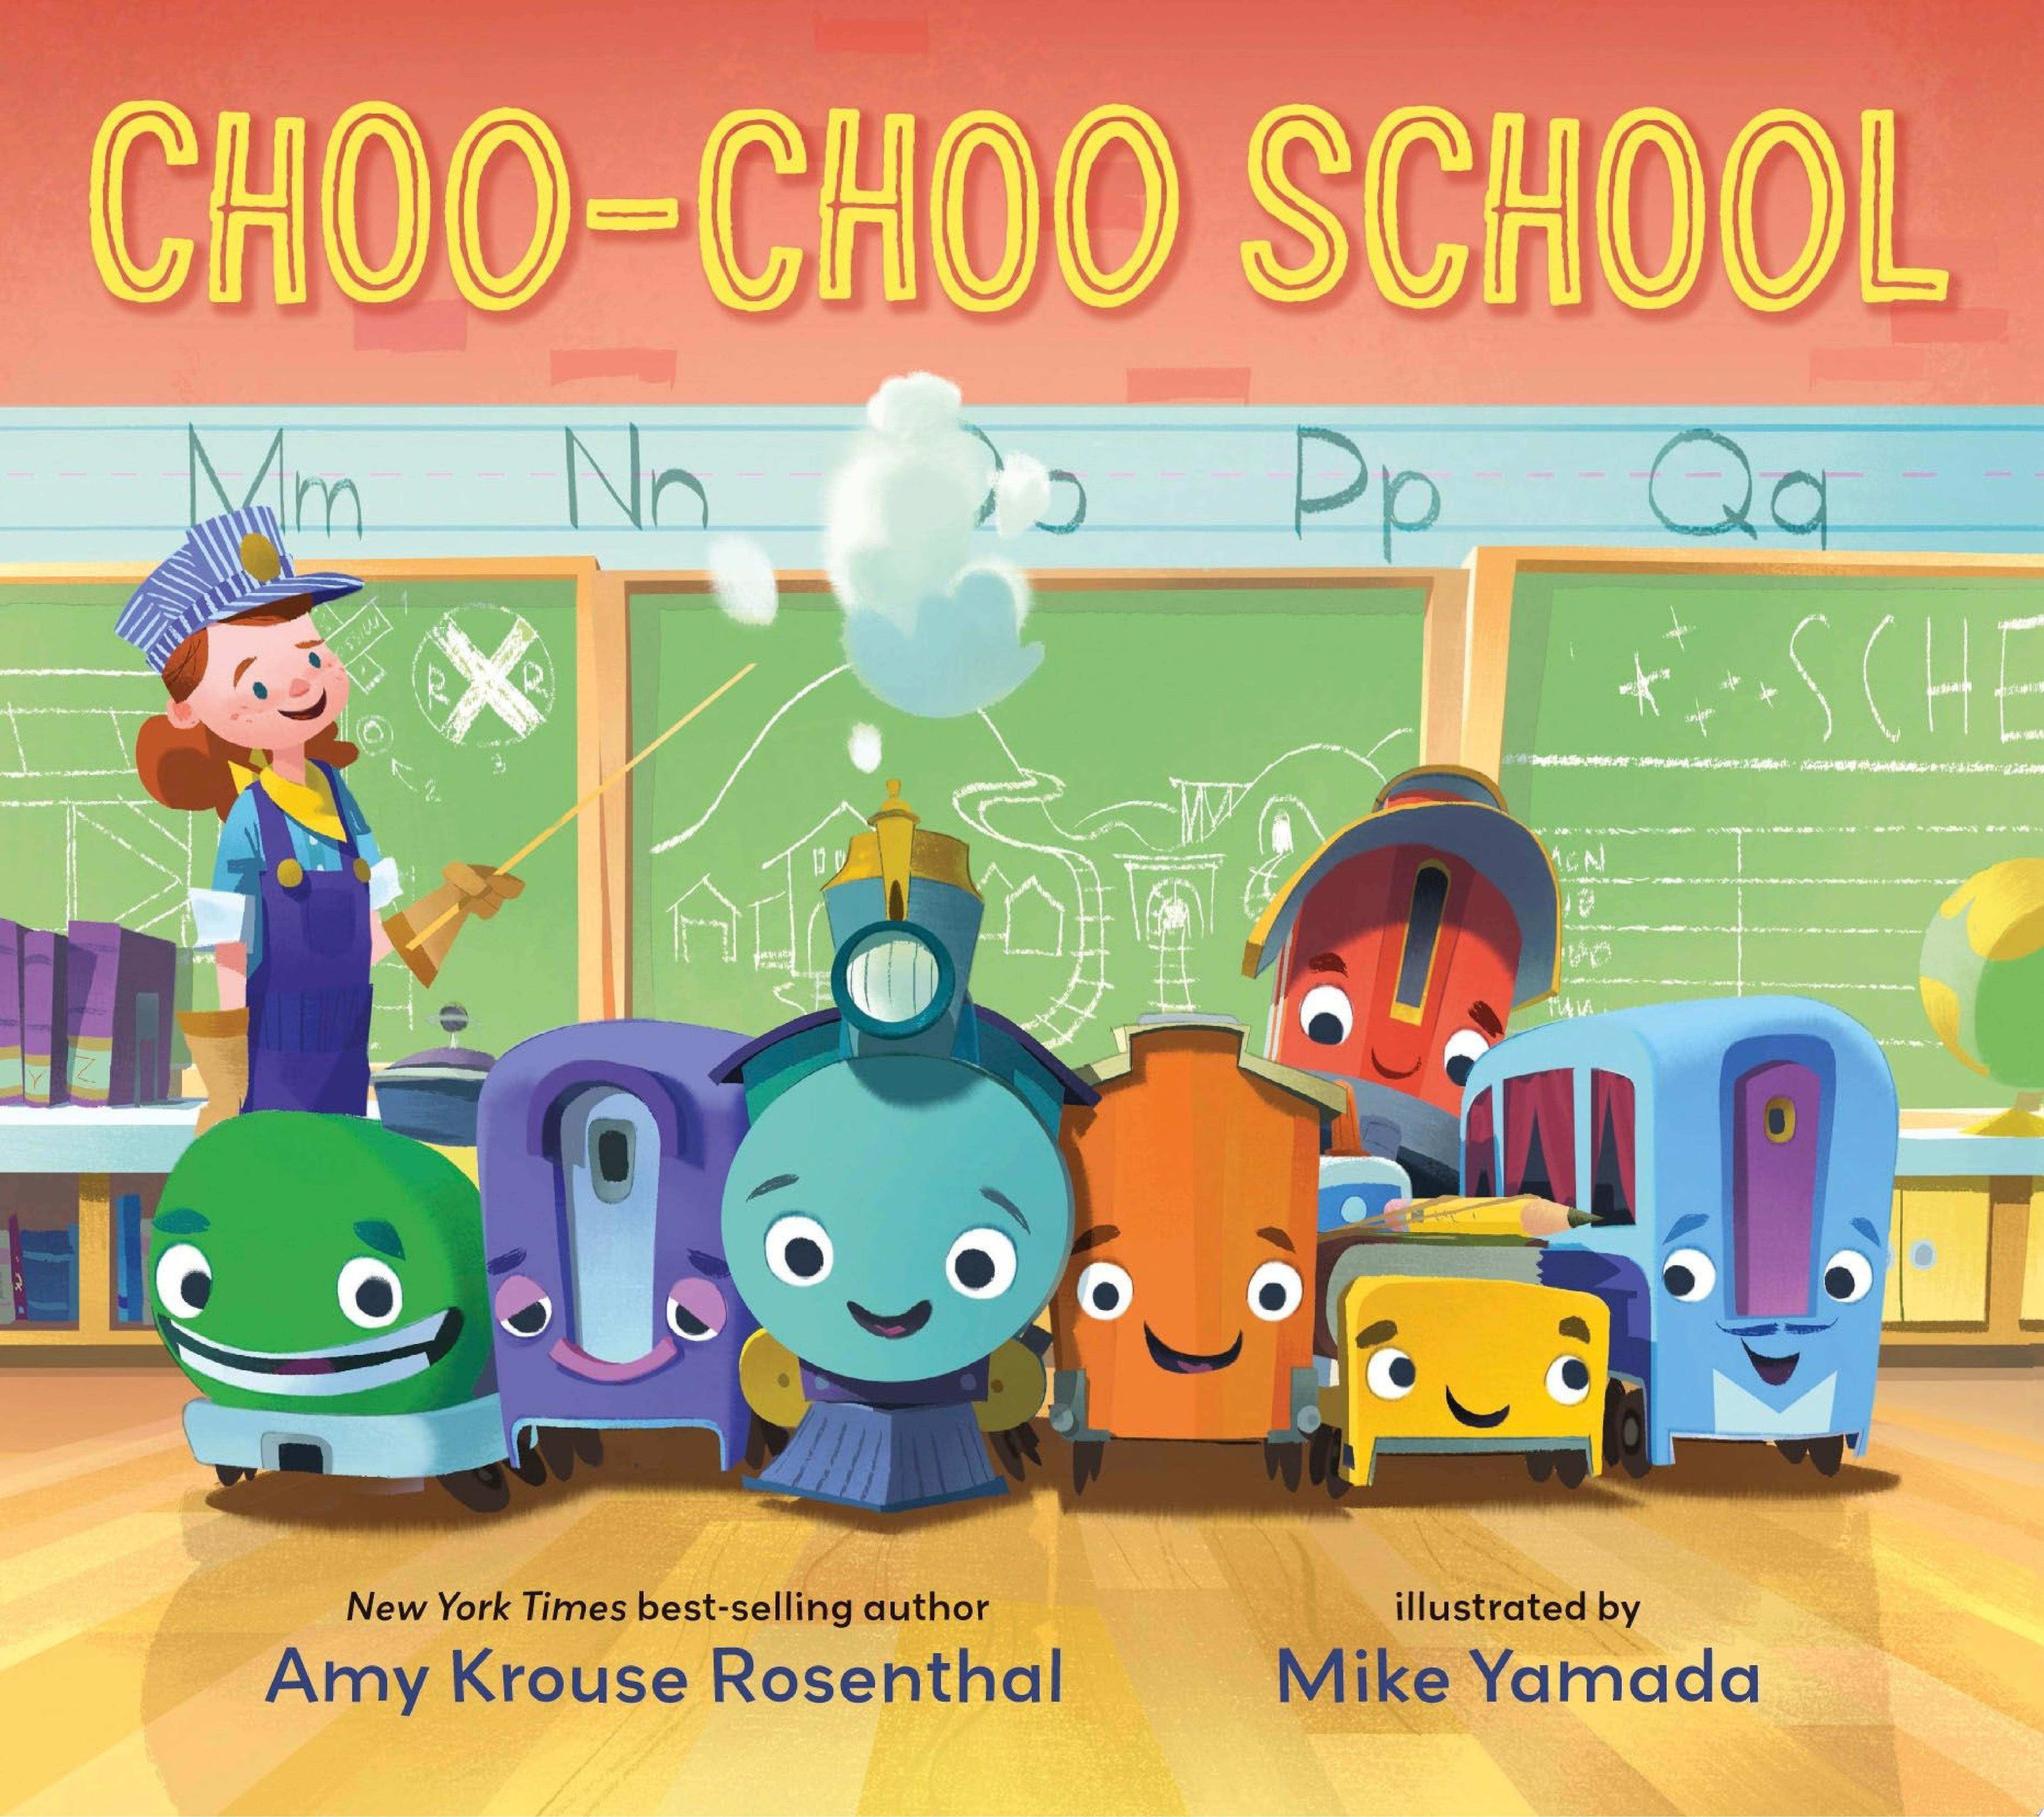 Image for "Choo-Choo School"